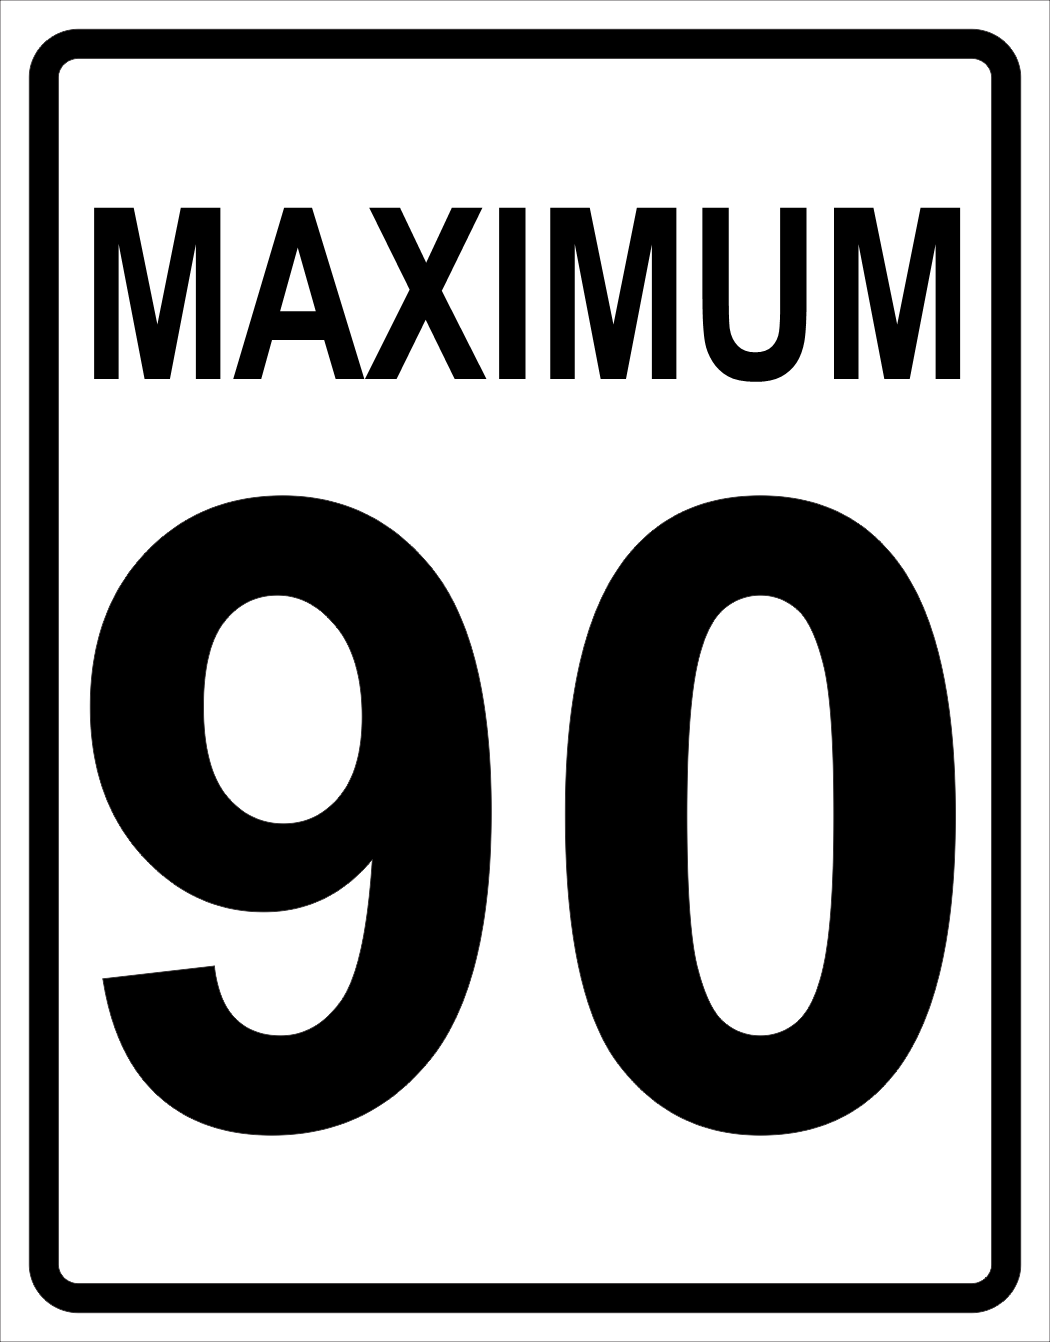 Maximum Speed Sign ( 90 ) MUTCDC RB-1